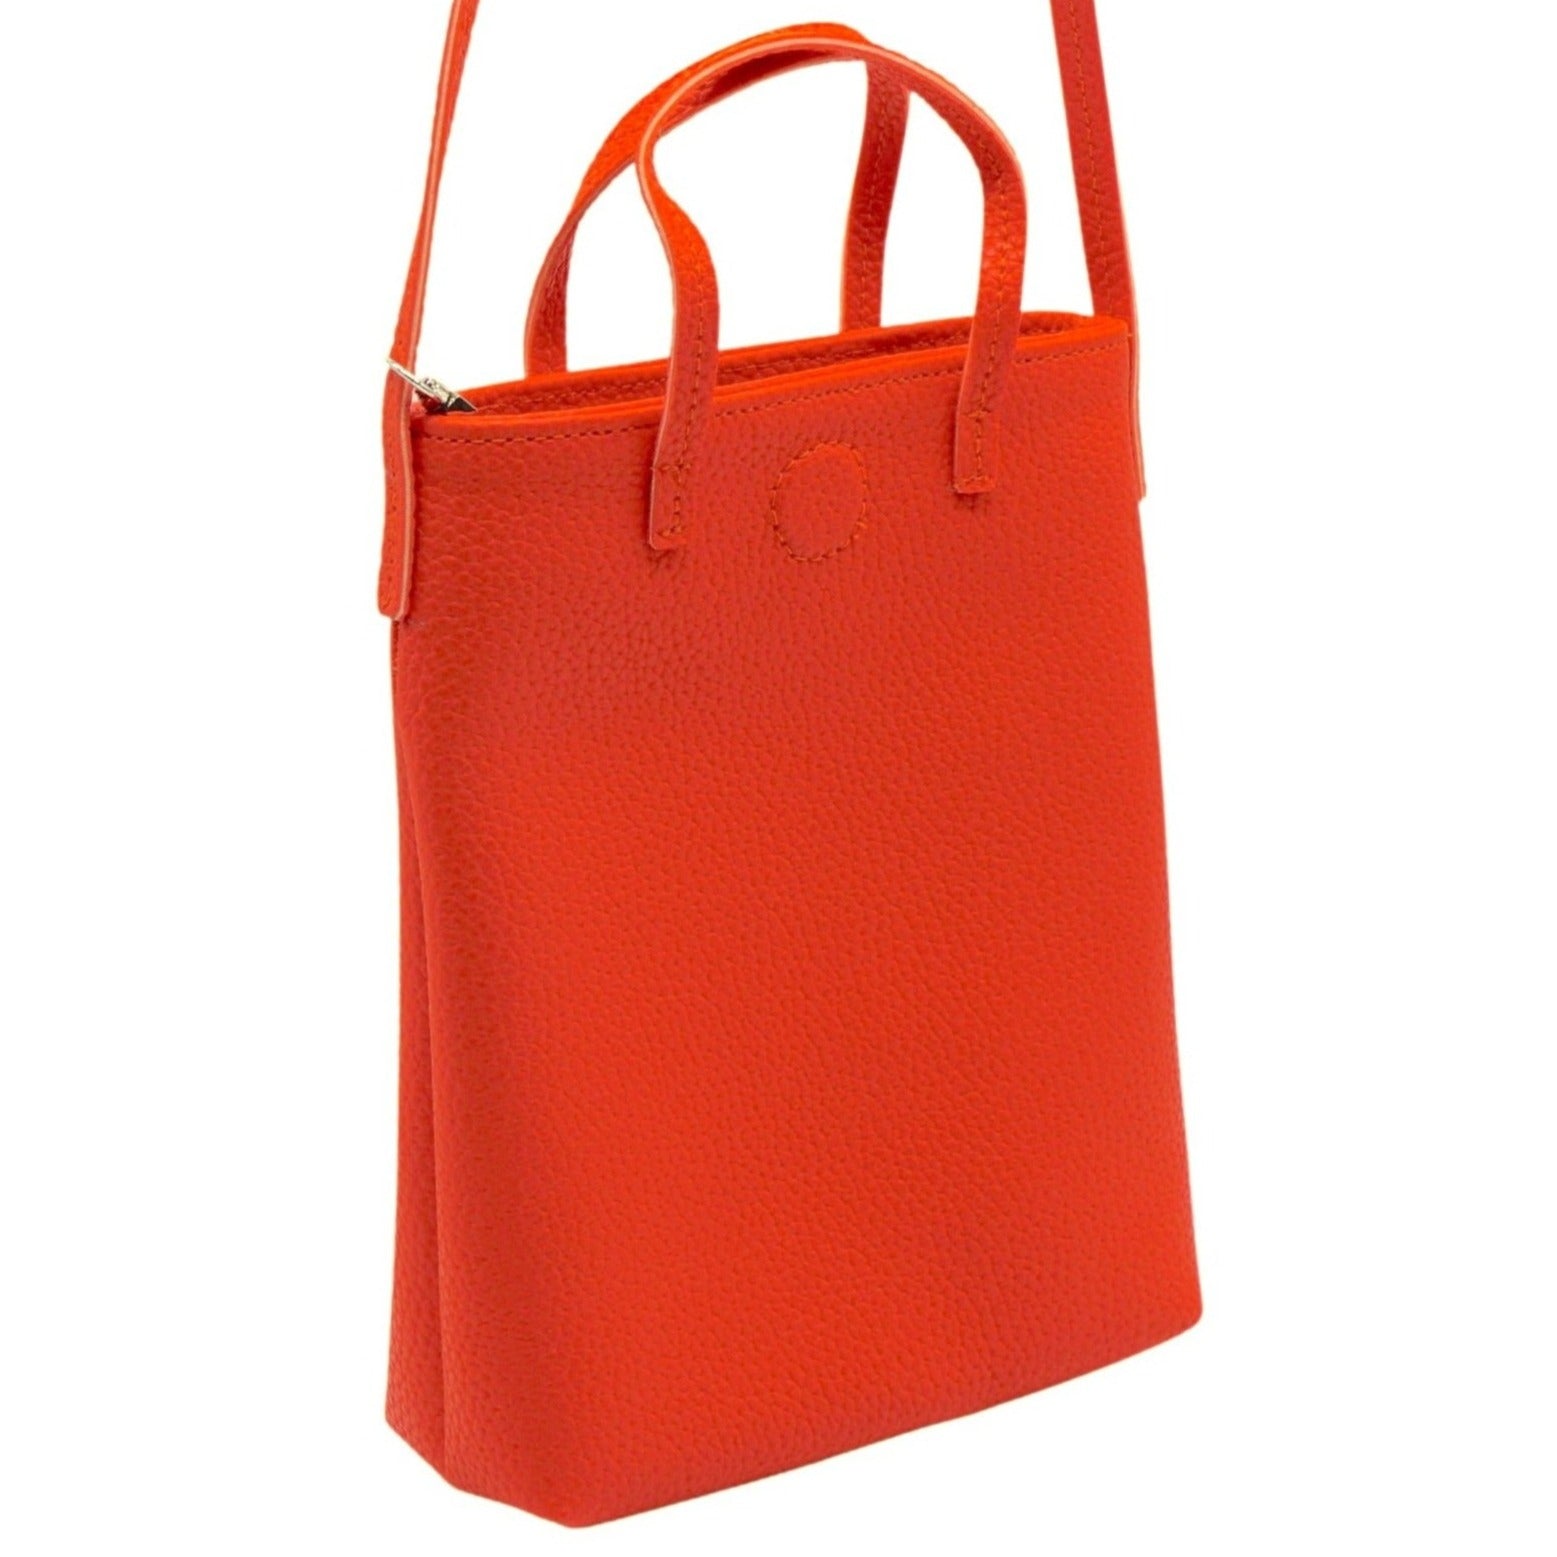 The Shopper Sweet Orange Handbag